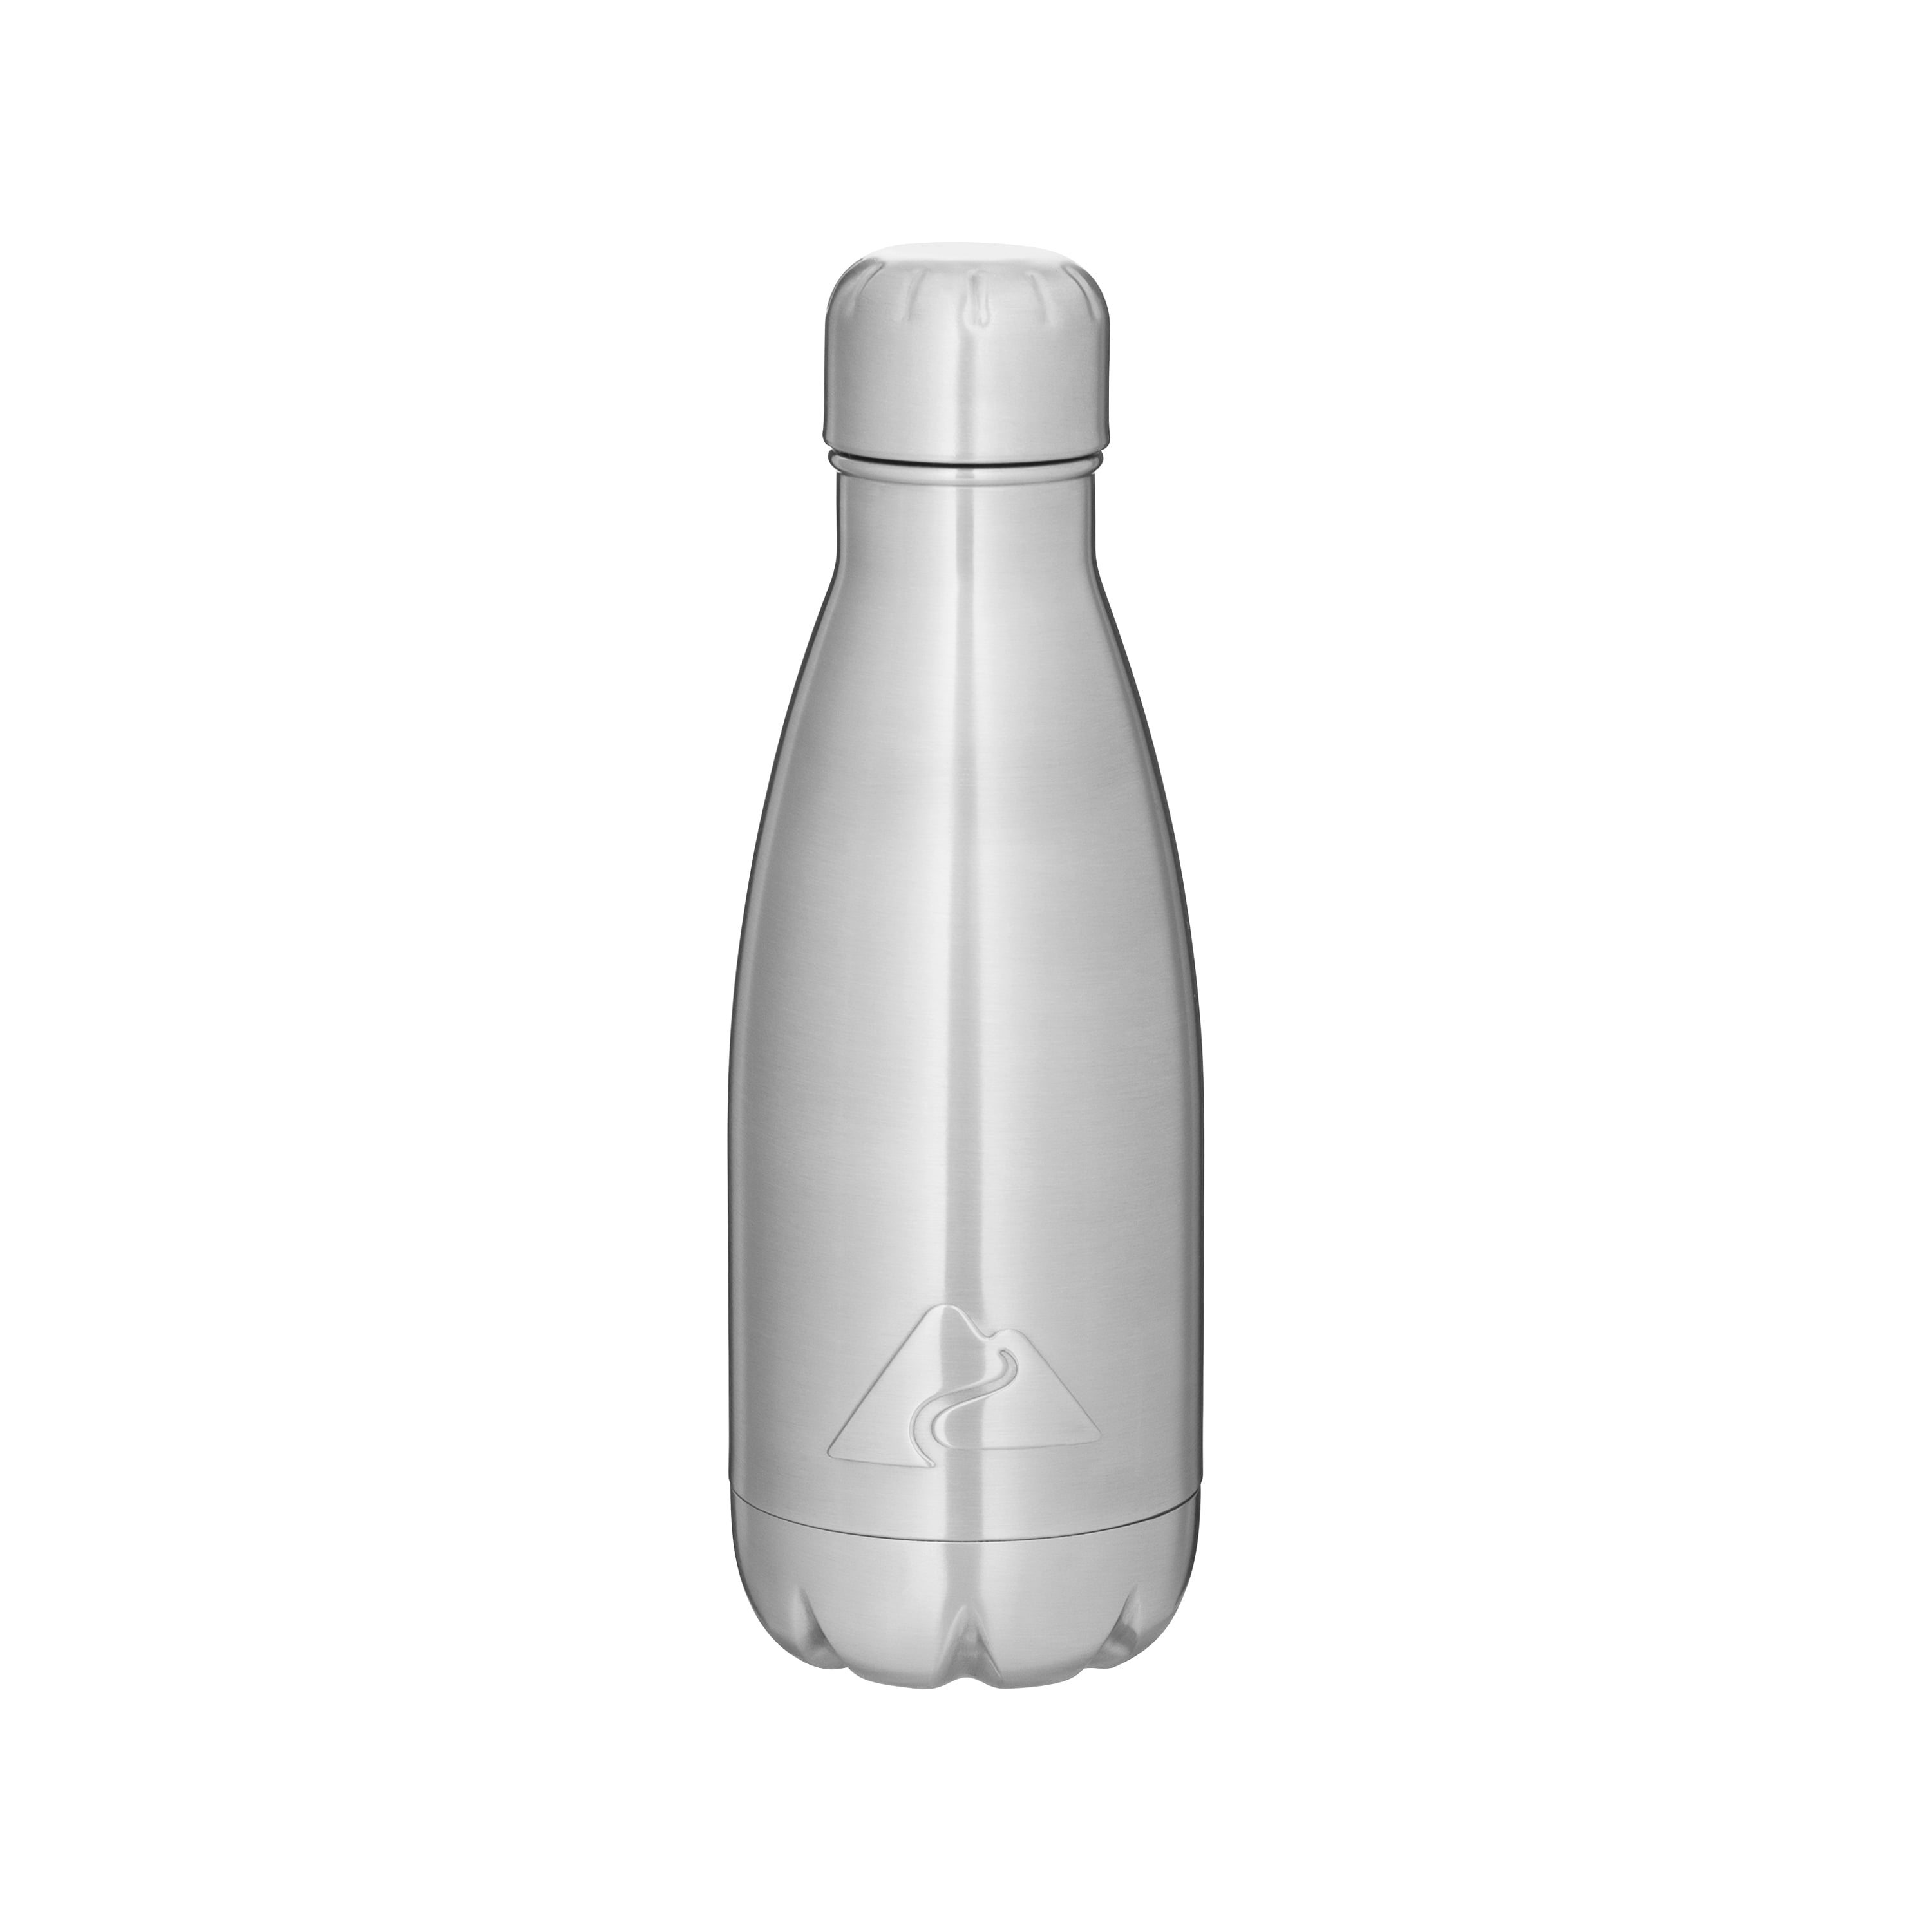  NICEMER Water Bottle, 12 Oz Water Bottle, Stainless